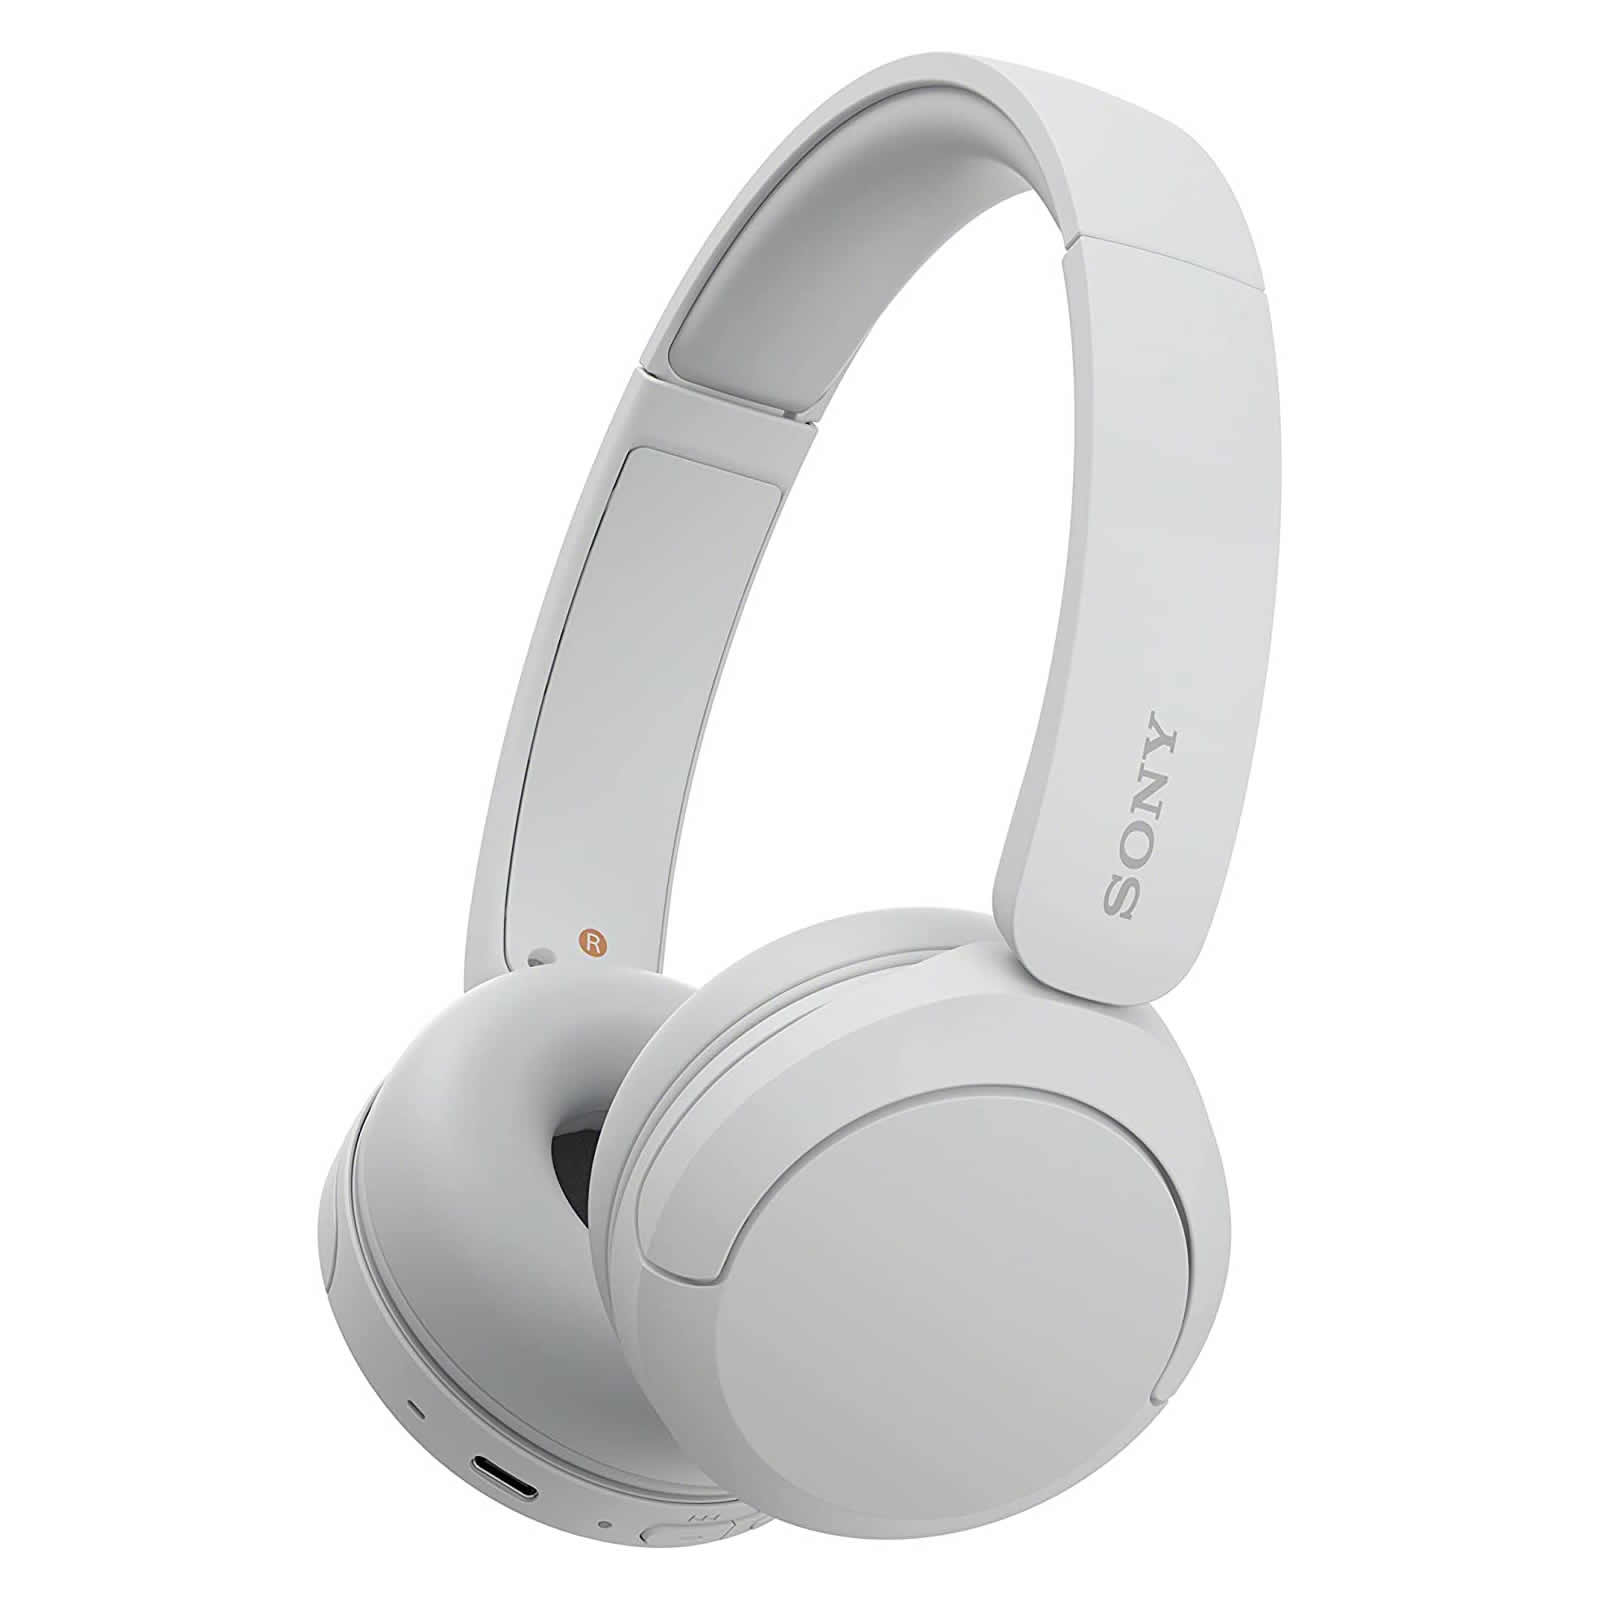 Sony Wireless Headphones Bluetooth 50-hours Playback White